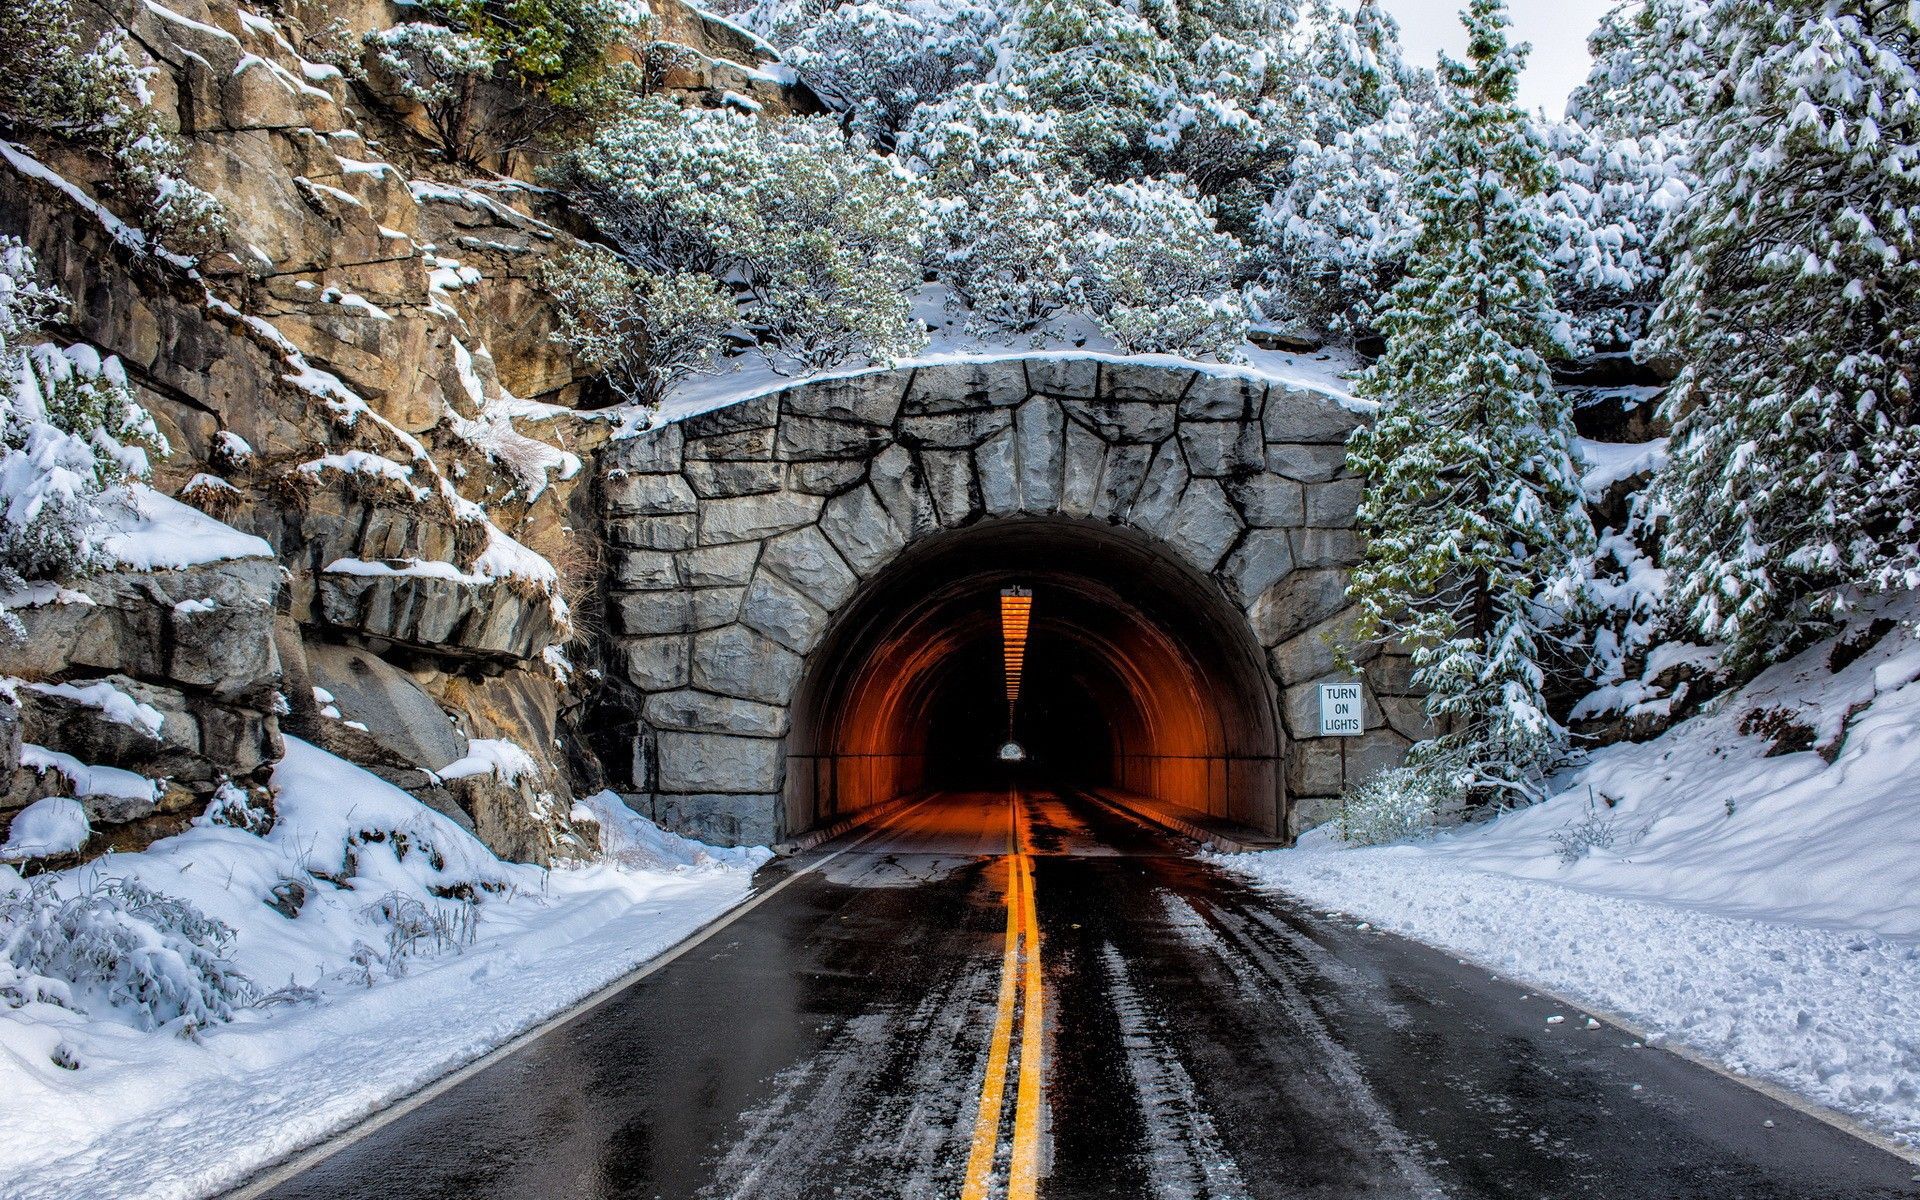 #ice, #rocks, #winter, #road sign, #tunnel, #snow, #trees